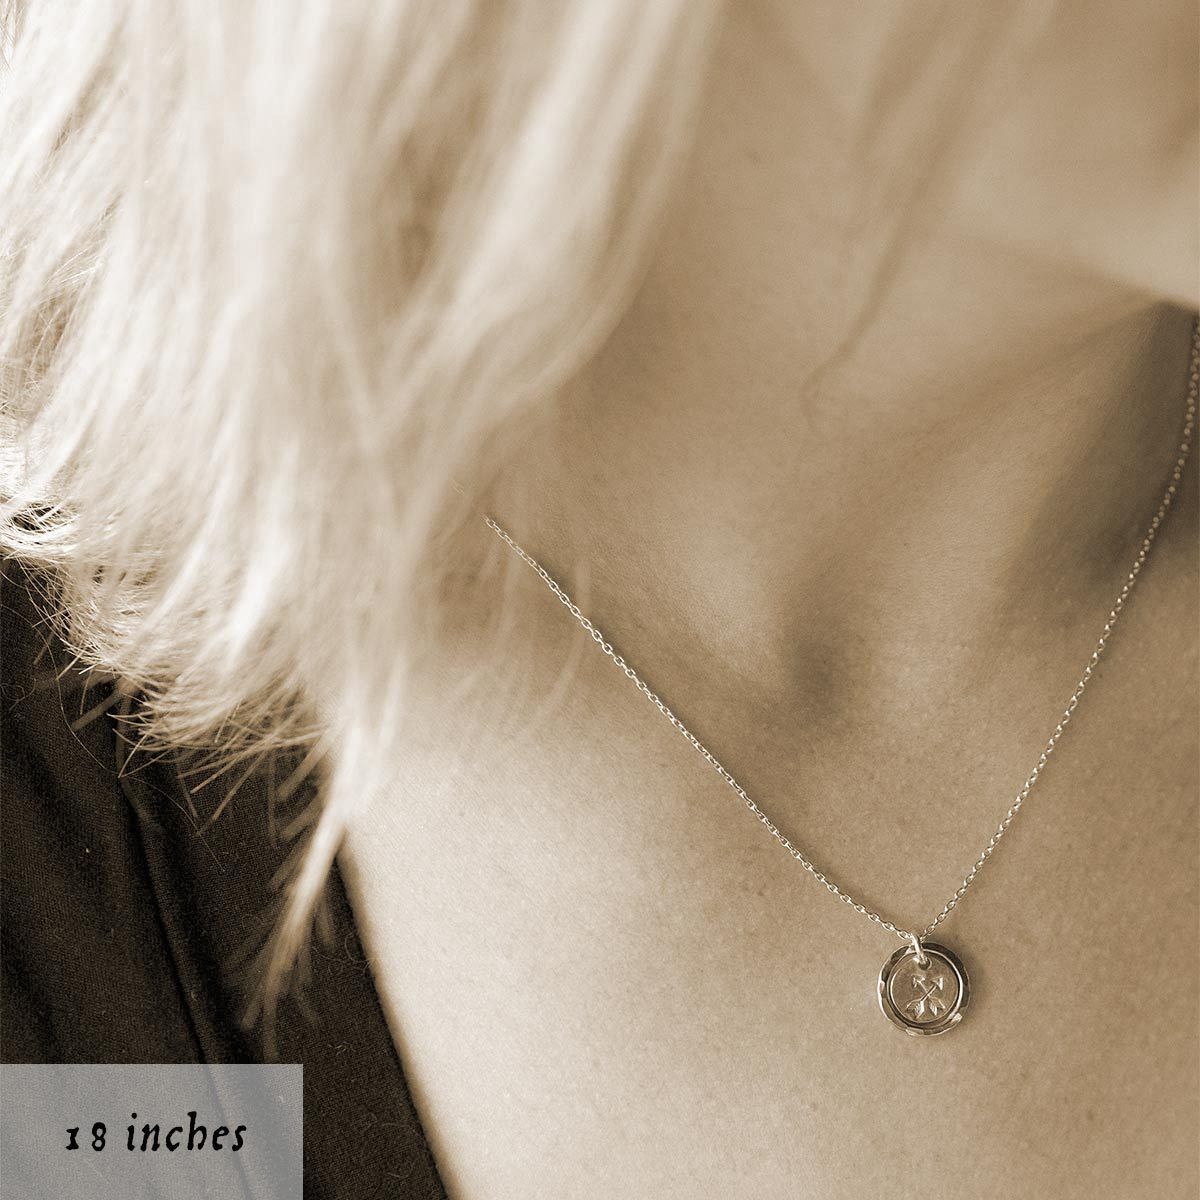 Friendship Eternity Necklace - Handmade Jewelry by Burnish